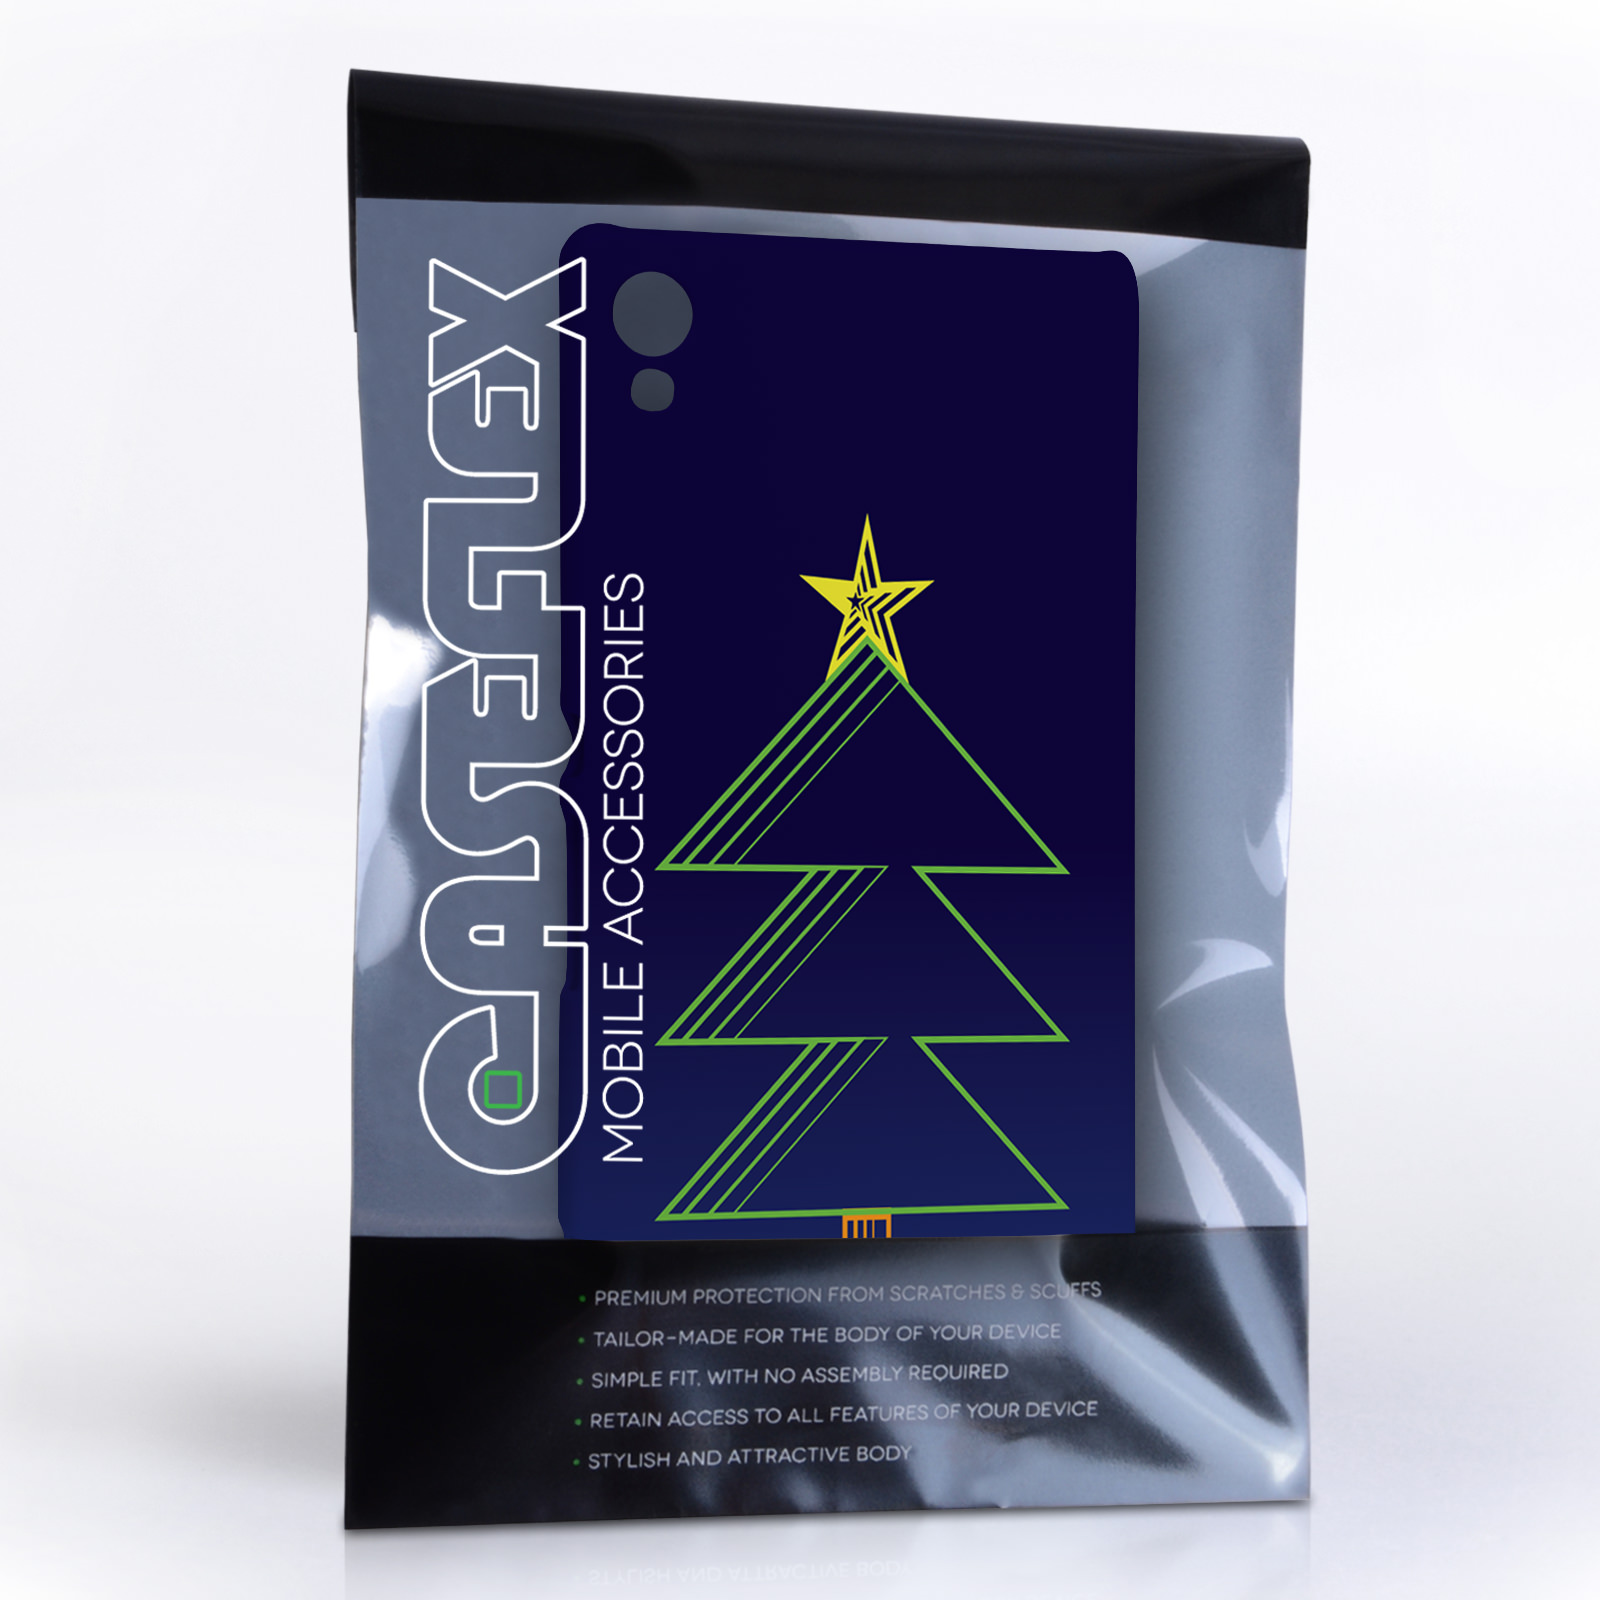 Caseflex Sony Xperia Z3+ Christmas Tree & Presents Hard Case